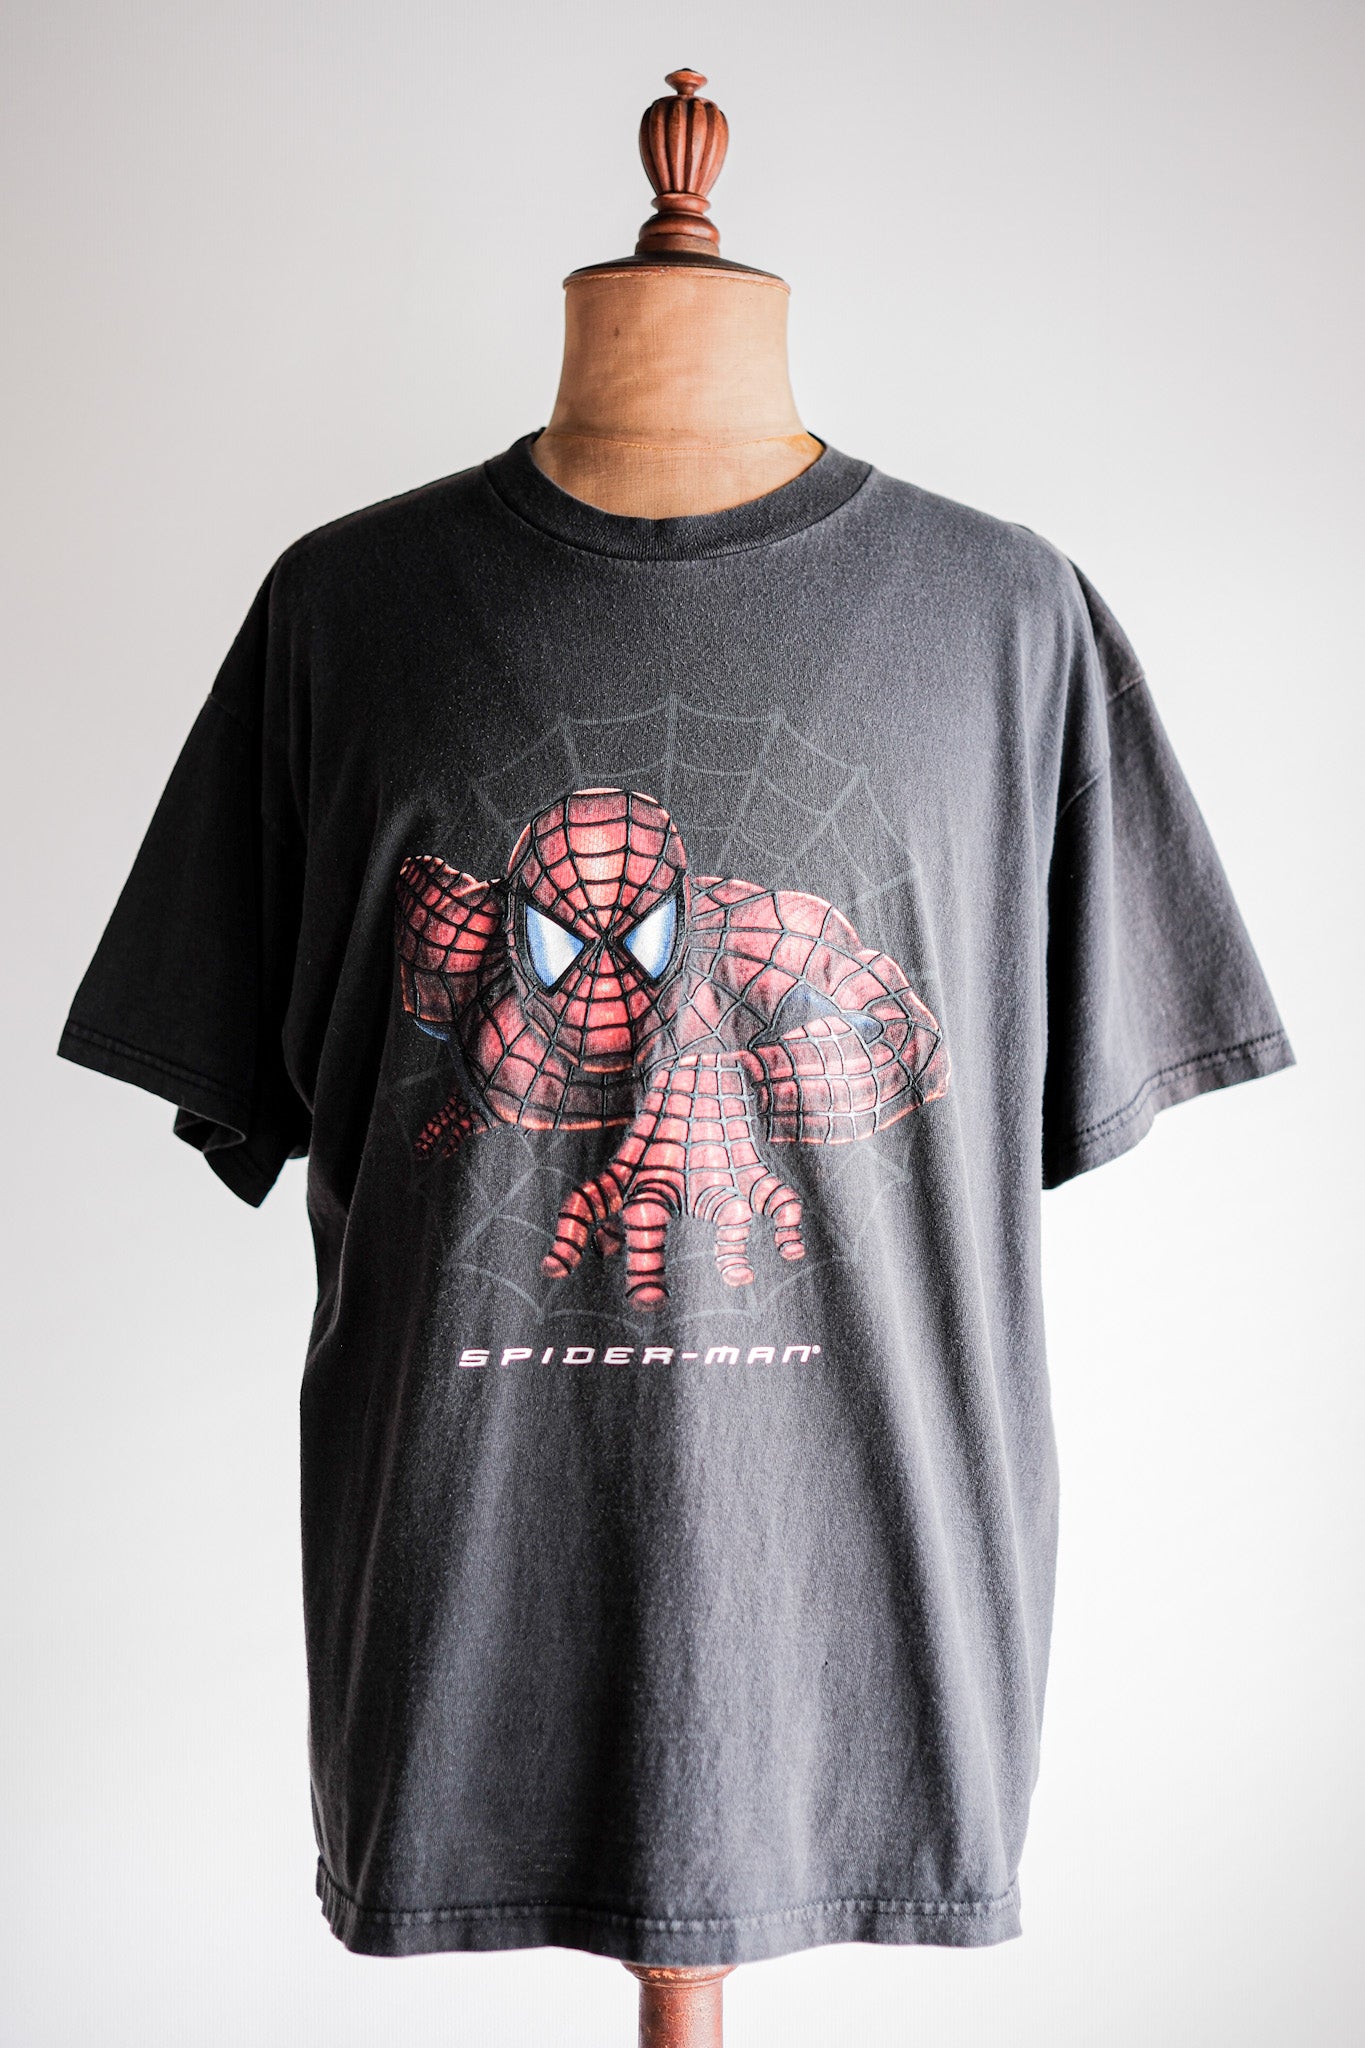 [~ 00's] Vintage Movie Print T-Shirt Size.xl "Spider-Man" "Made in U.S.A."